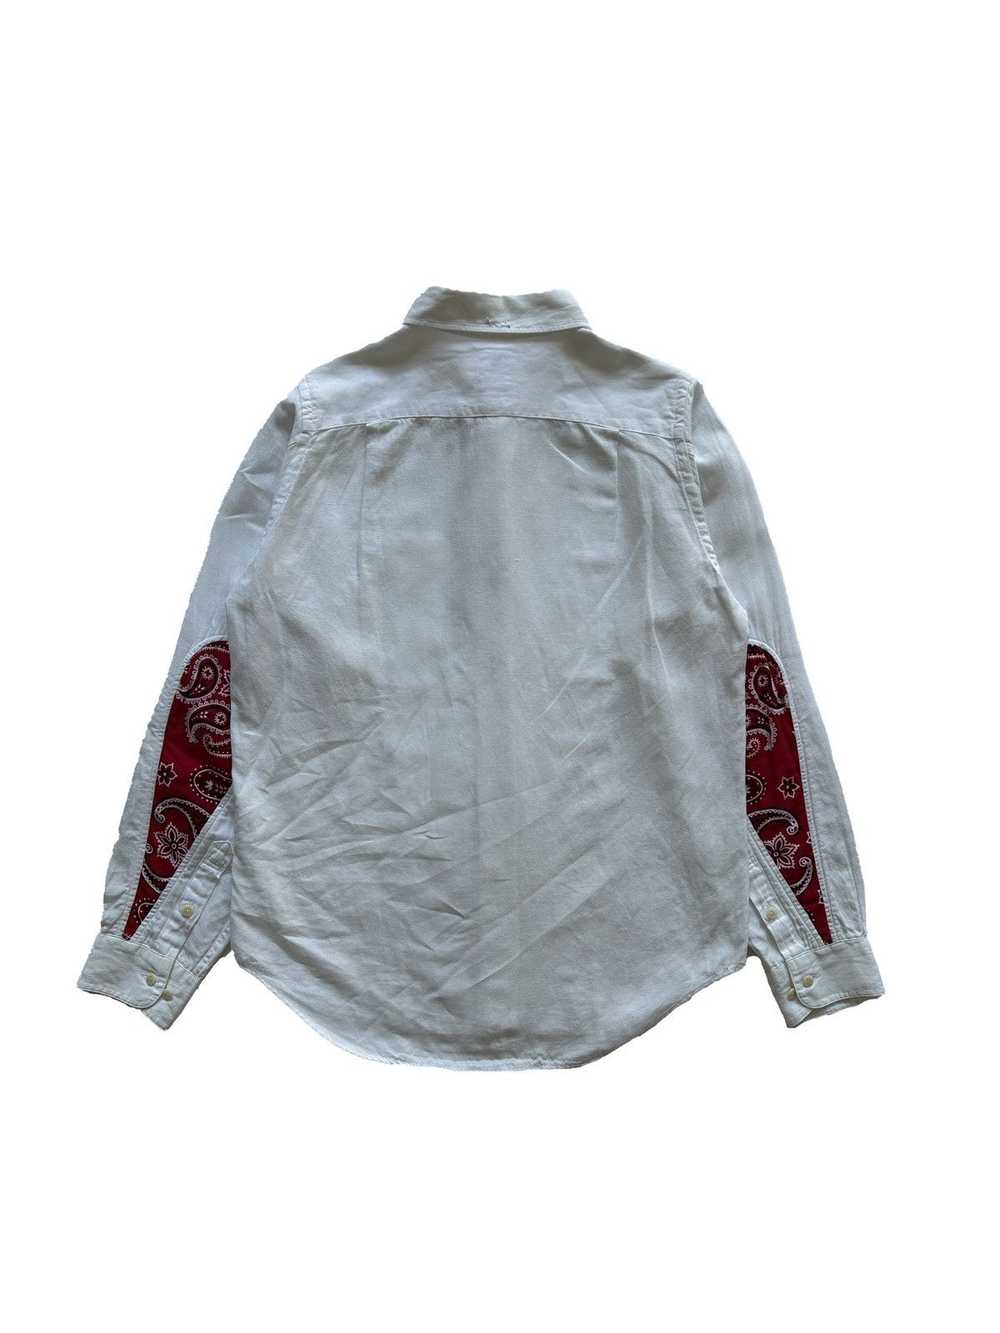 Visvim SS19 Albacore Jumbo Shirt L/S (Luxsic) - image 2